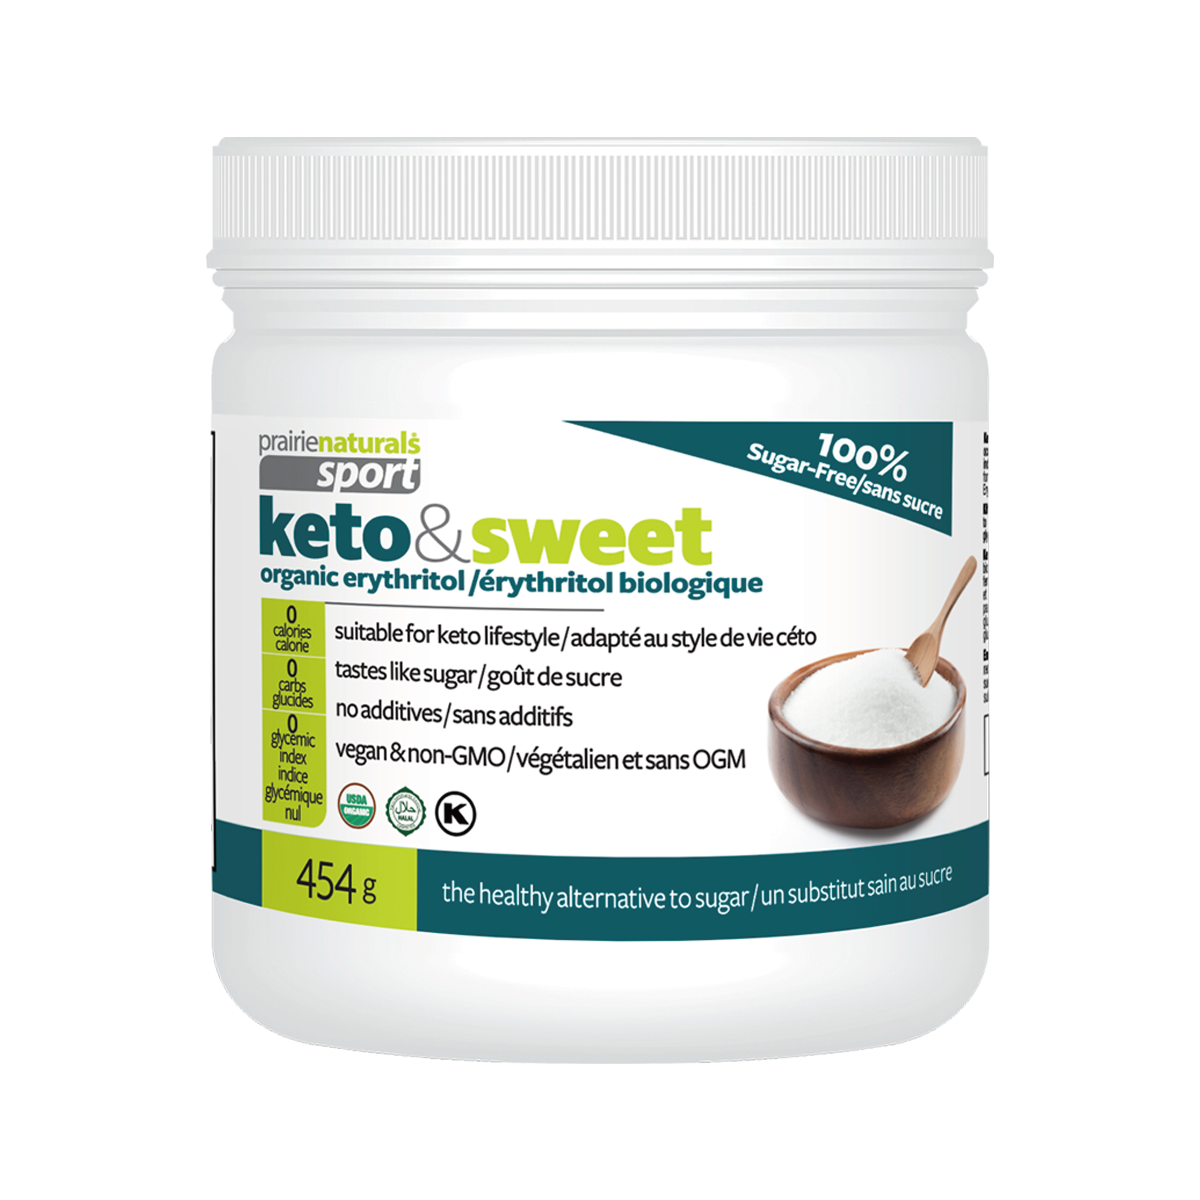 Prairie Naturals Keto & Sweet Organic 有機赤蘚糖醇 454g -       100% 天然、0 淨碳水化合物、 0 卡路里 , 適合減肥人士，生酮飲食人士￼(Exp: 2024/11)